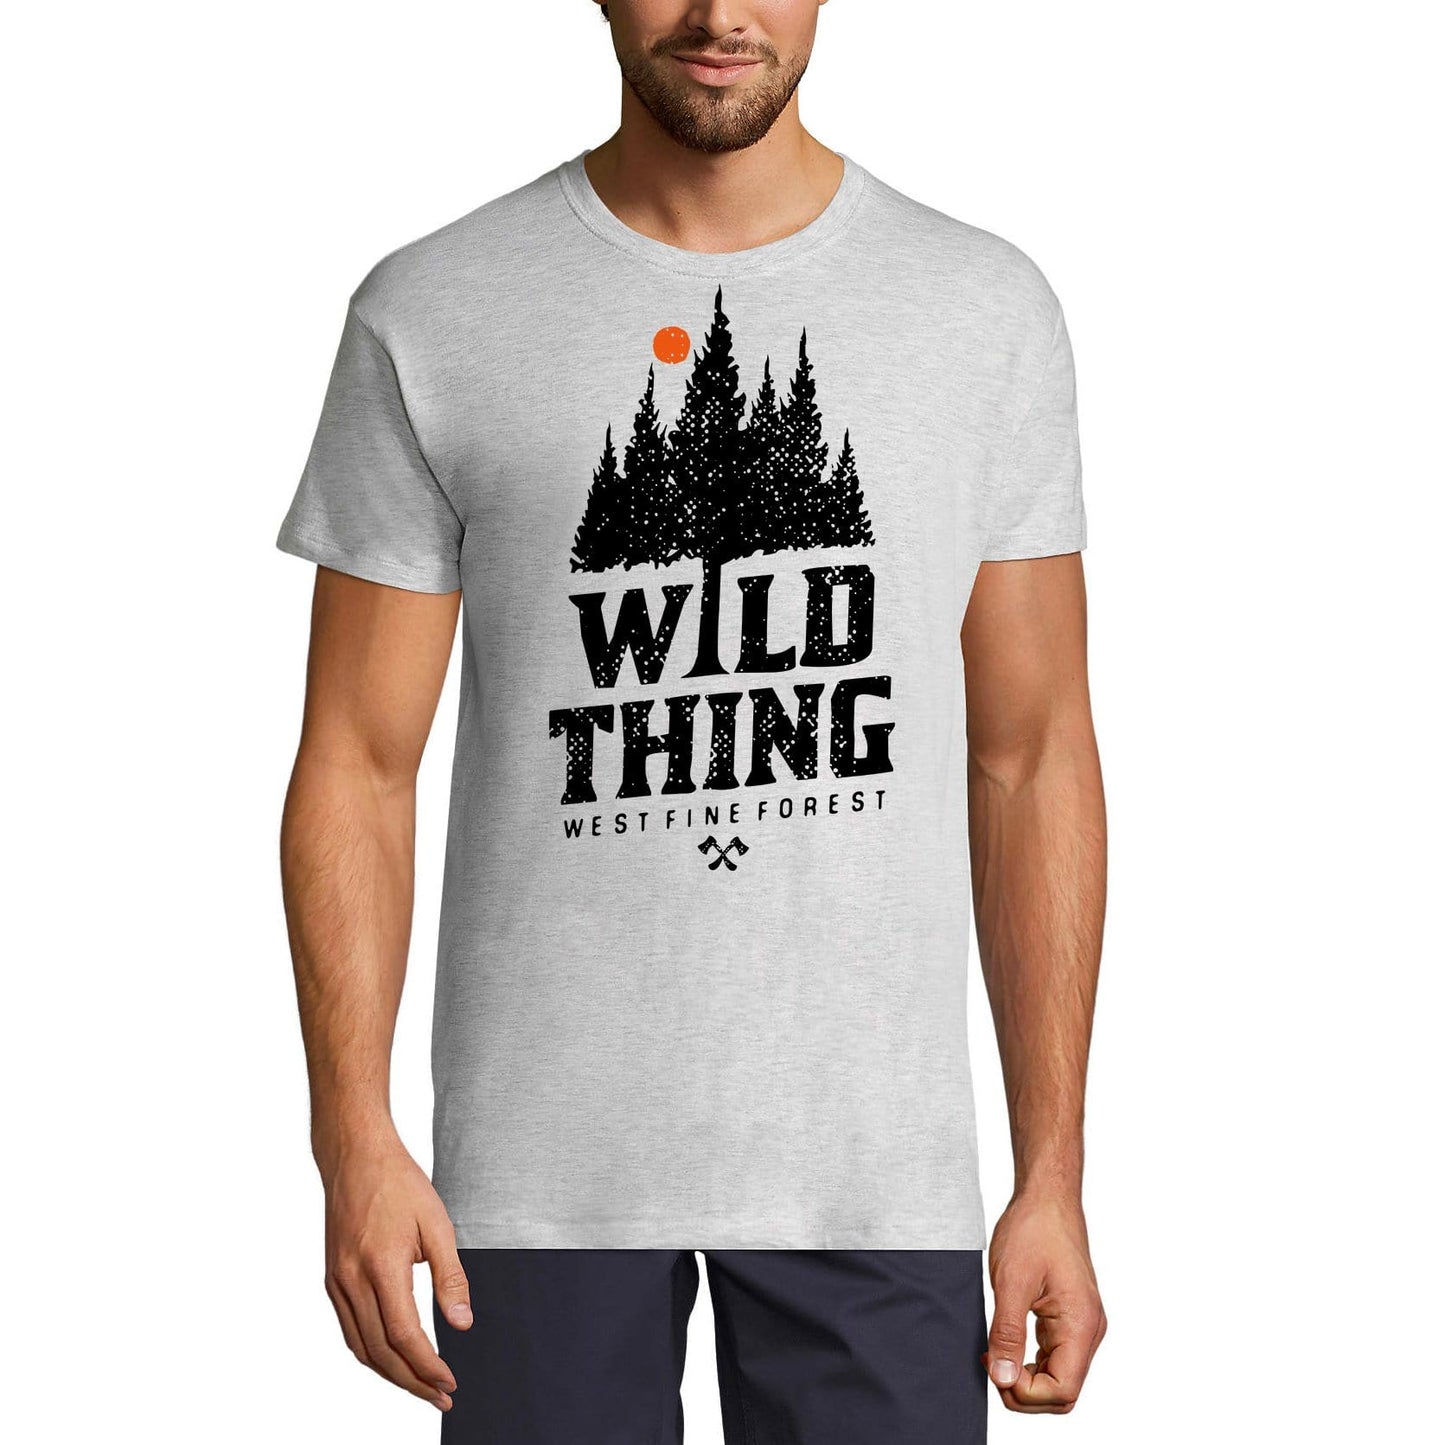 ULTRABASIC Men's T-Shirt Wild Westfine Forest - Short Sleeve Tee shirt